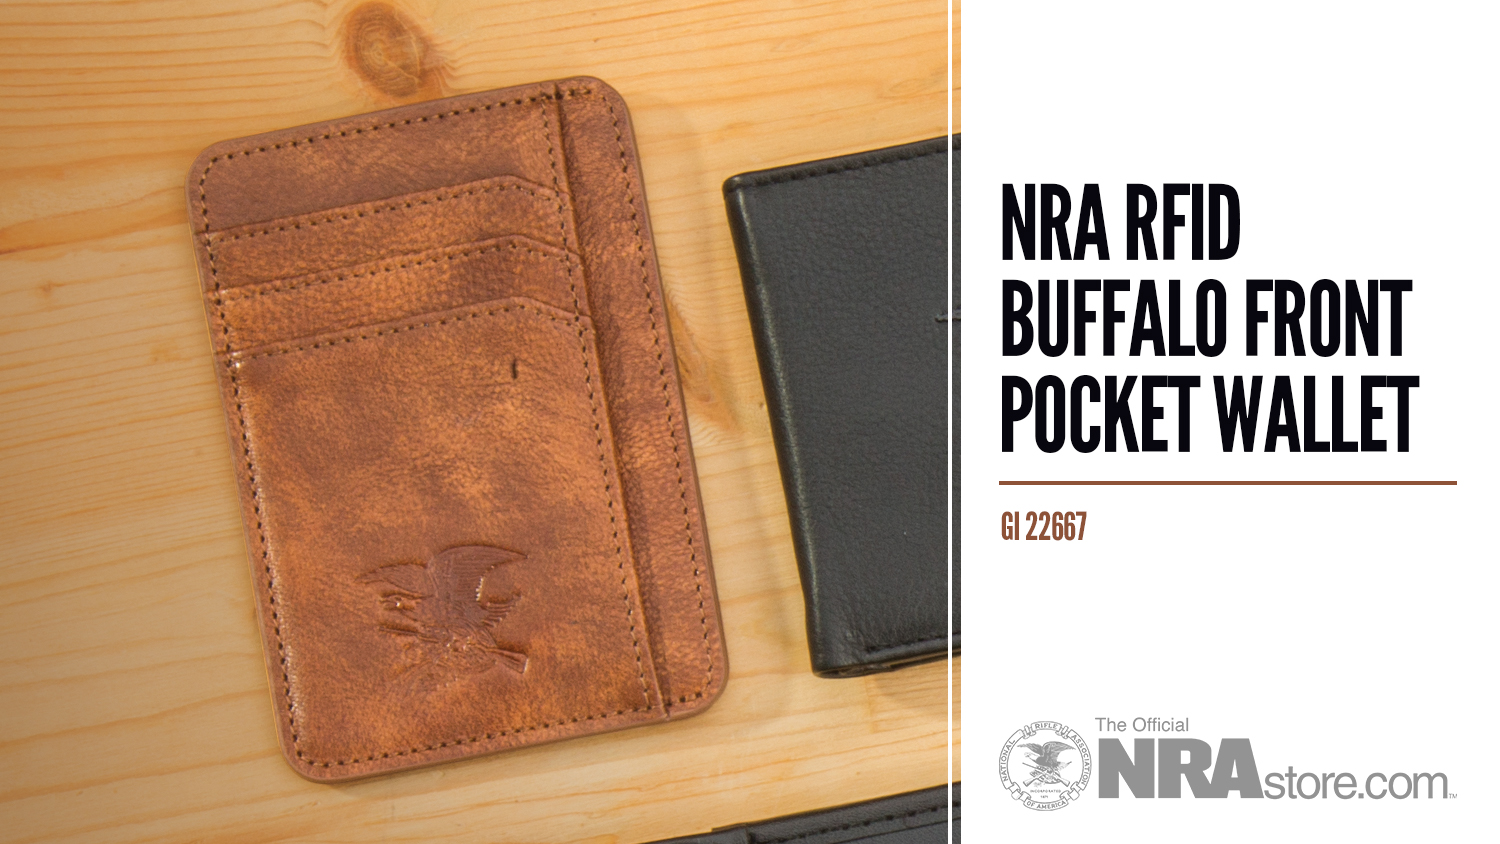 NRAstore Product Highlight: NRA RFID Buffalo Front Pocket Wallet